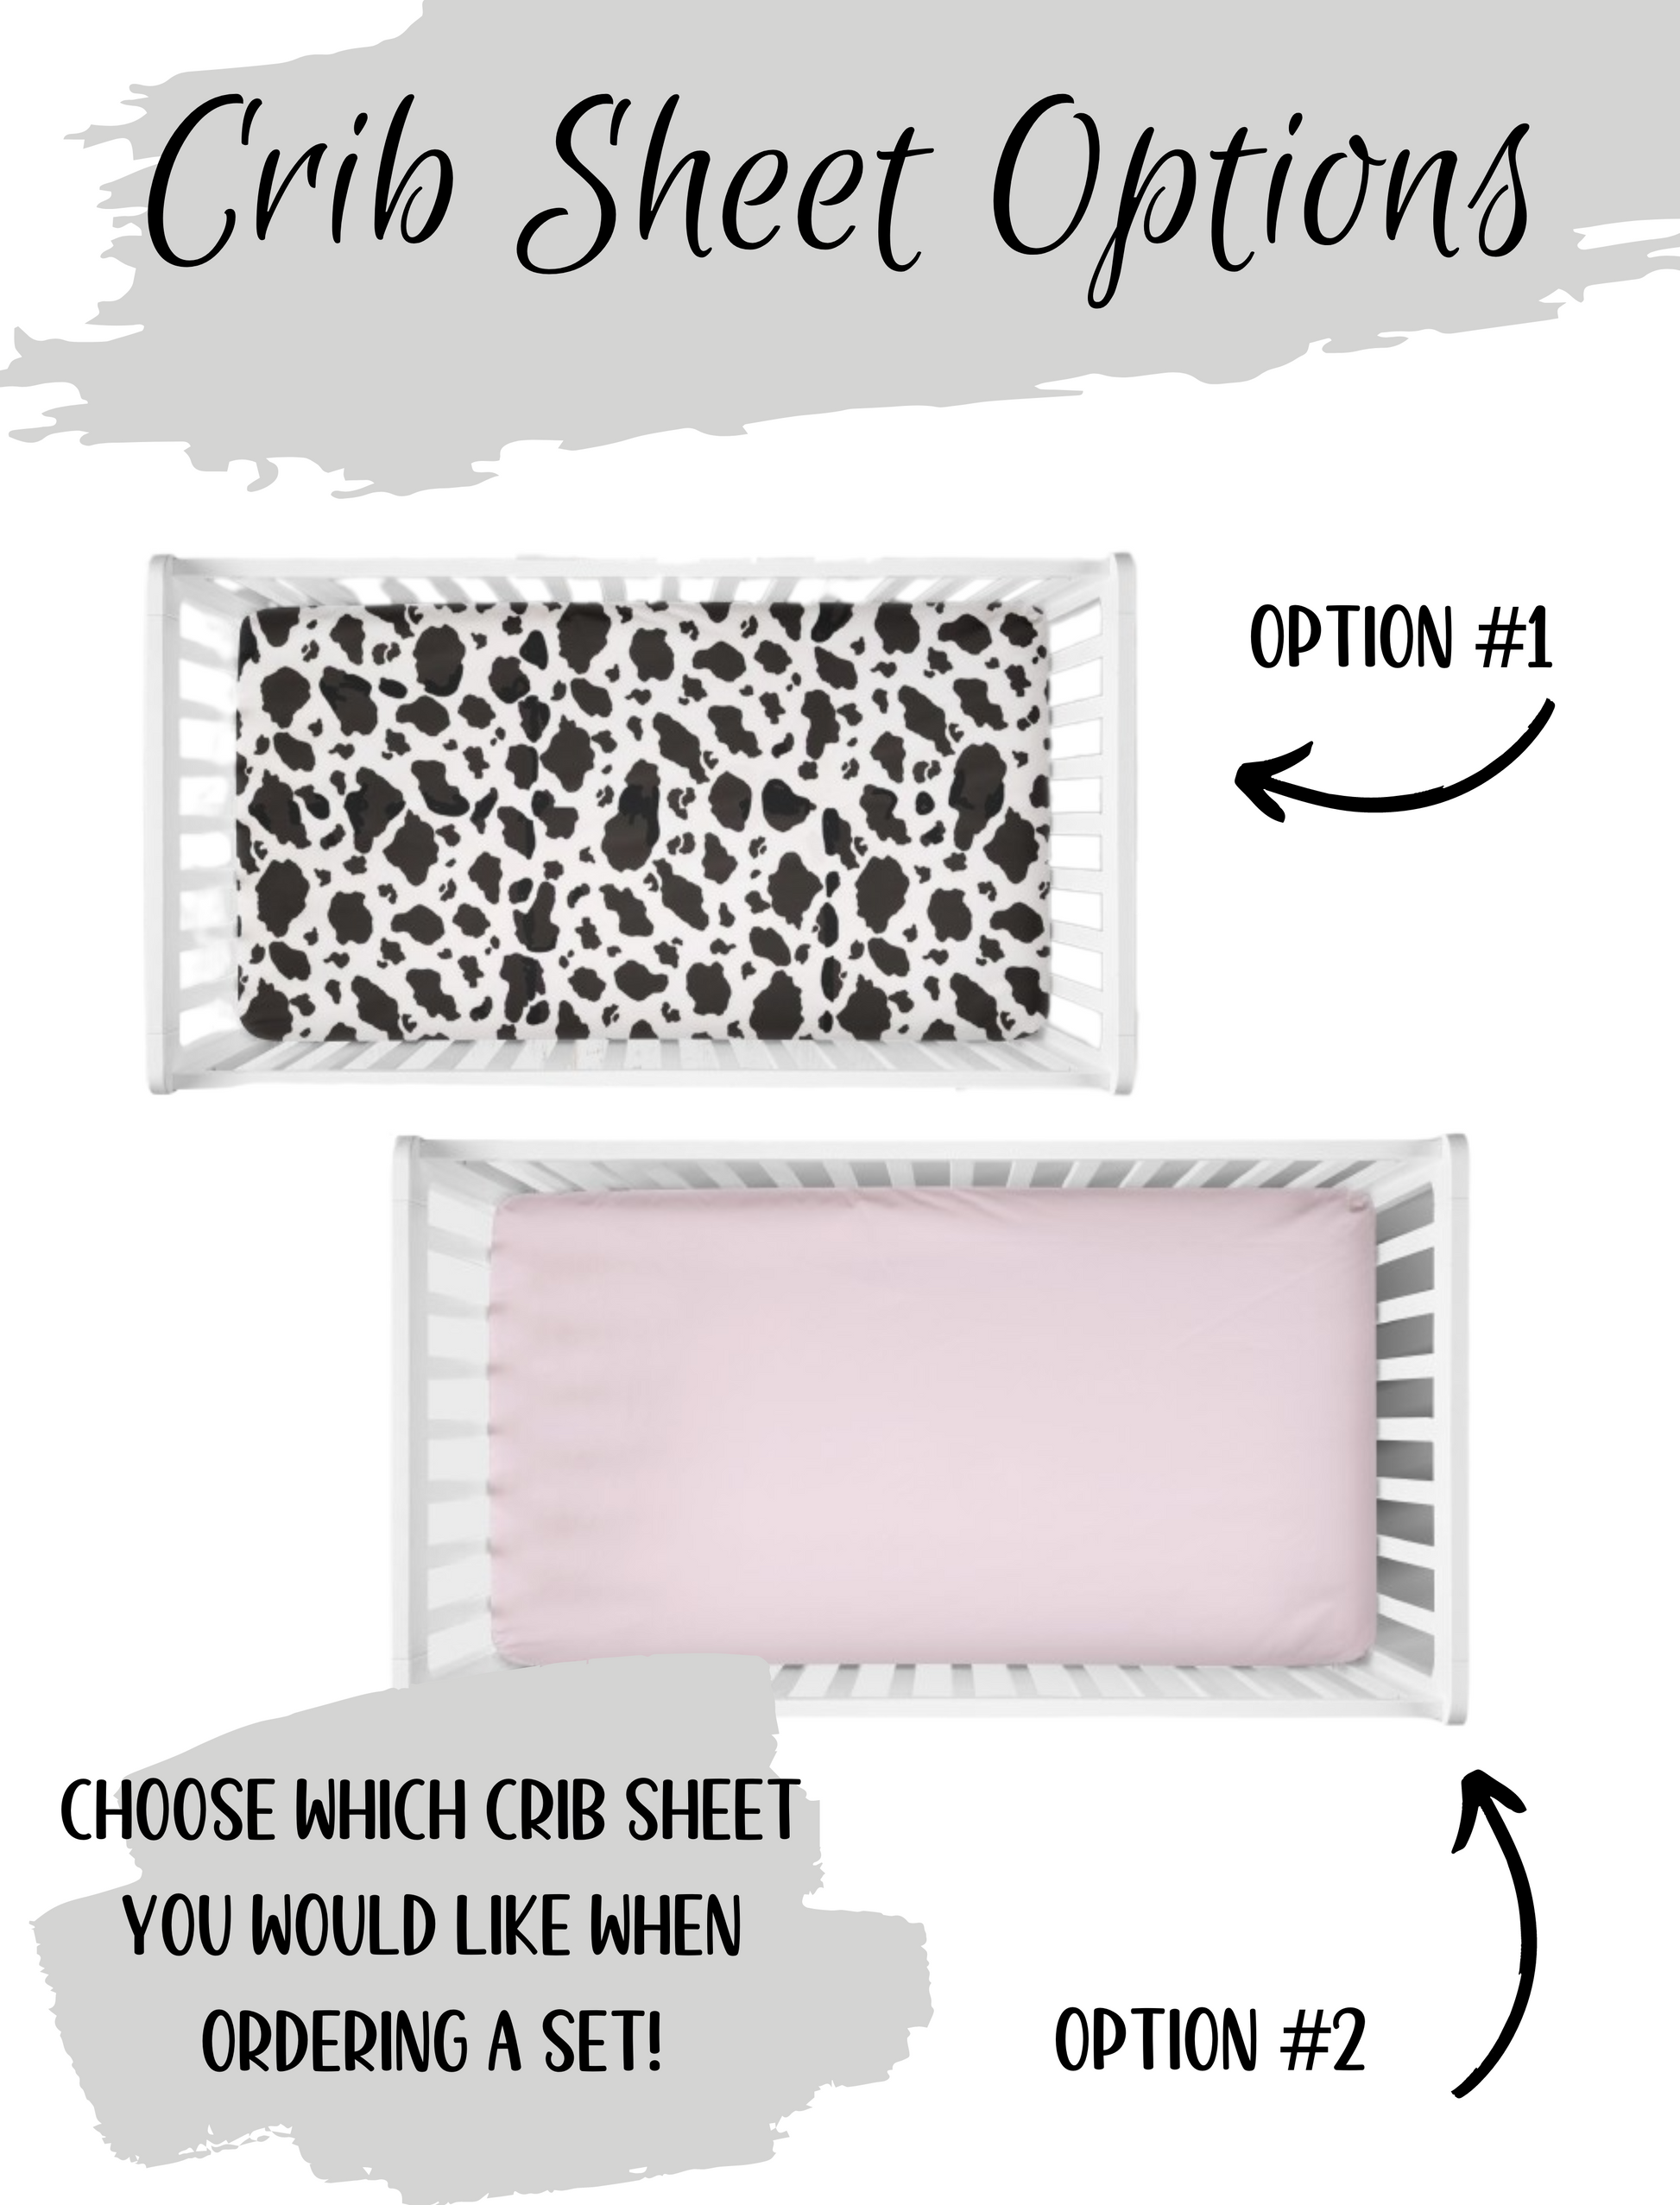 pick your crib sheet for your set - cow print crib sheet or light pink crib sheet. 